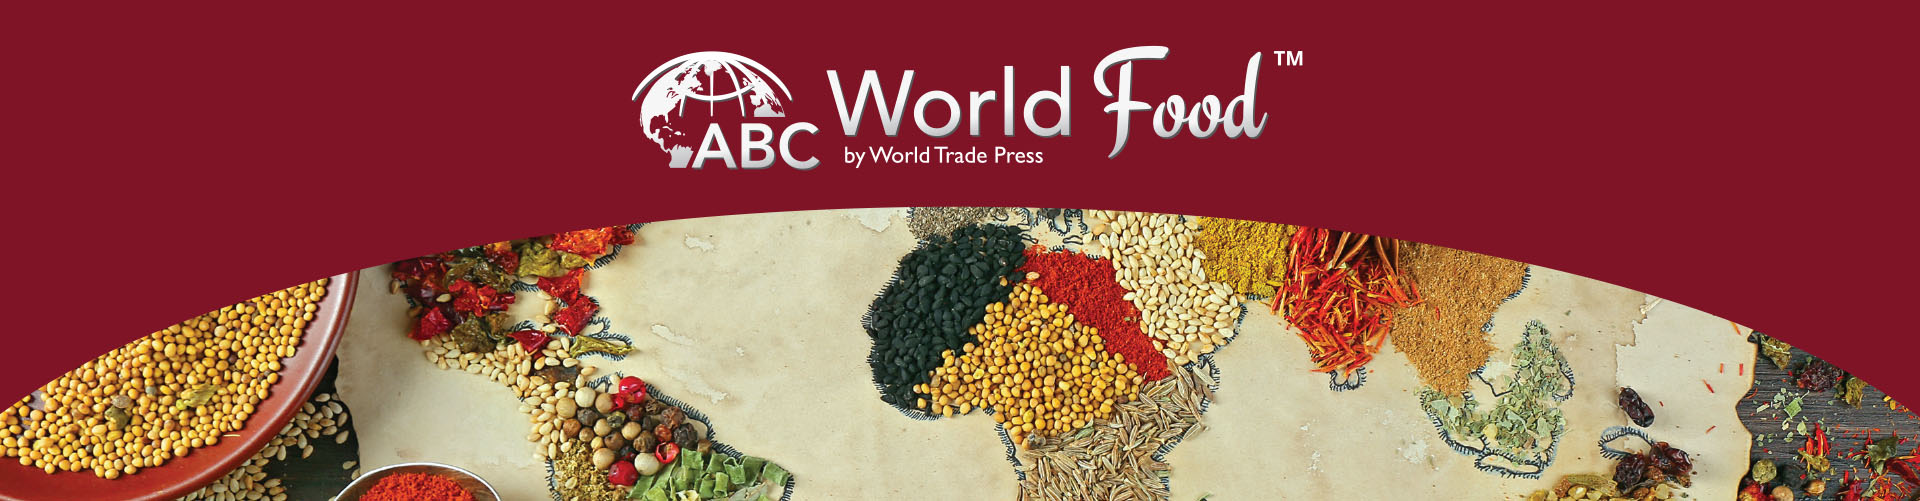 ABC World Food